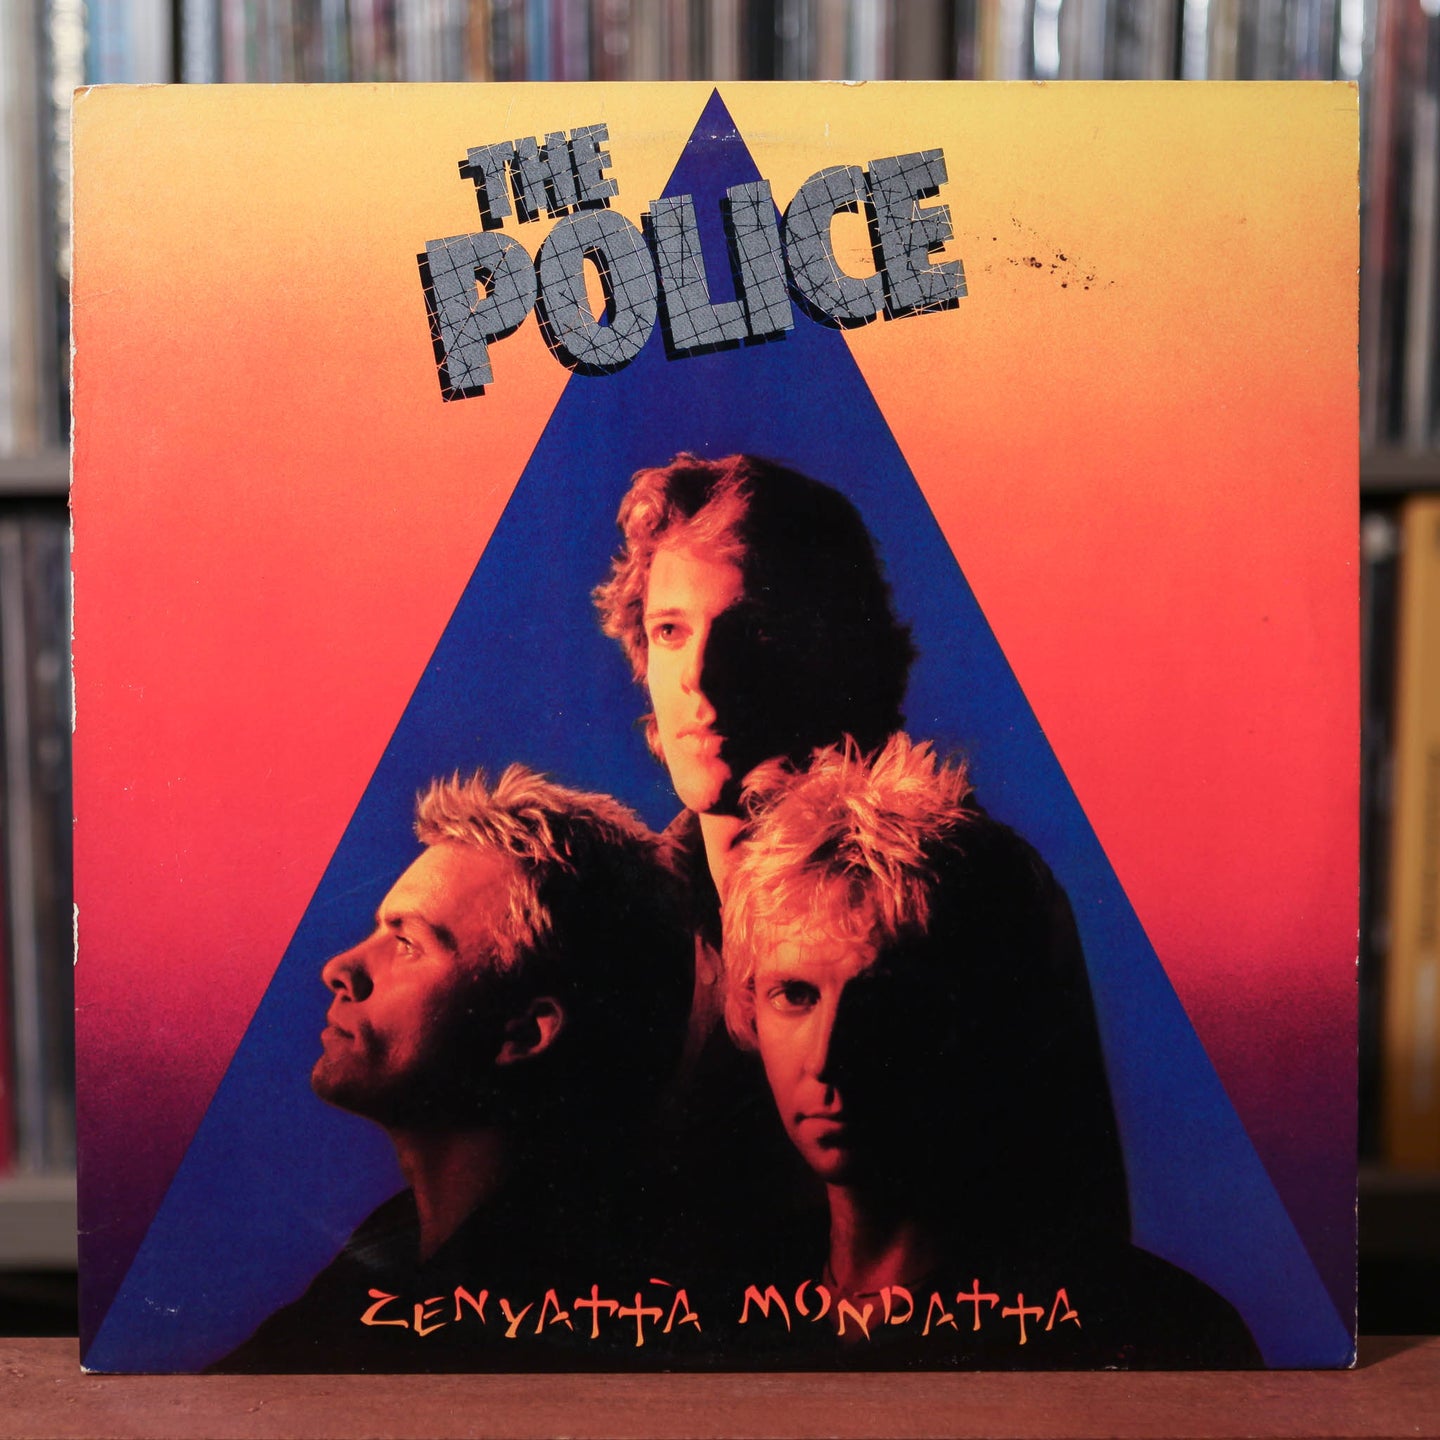 Police - Zenyatta Mondatta - 1980 A&M, VG/VG+